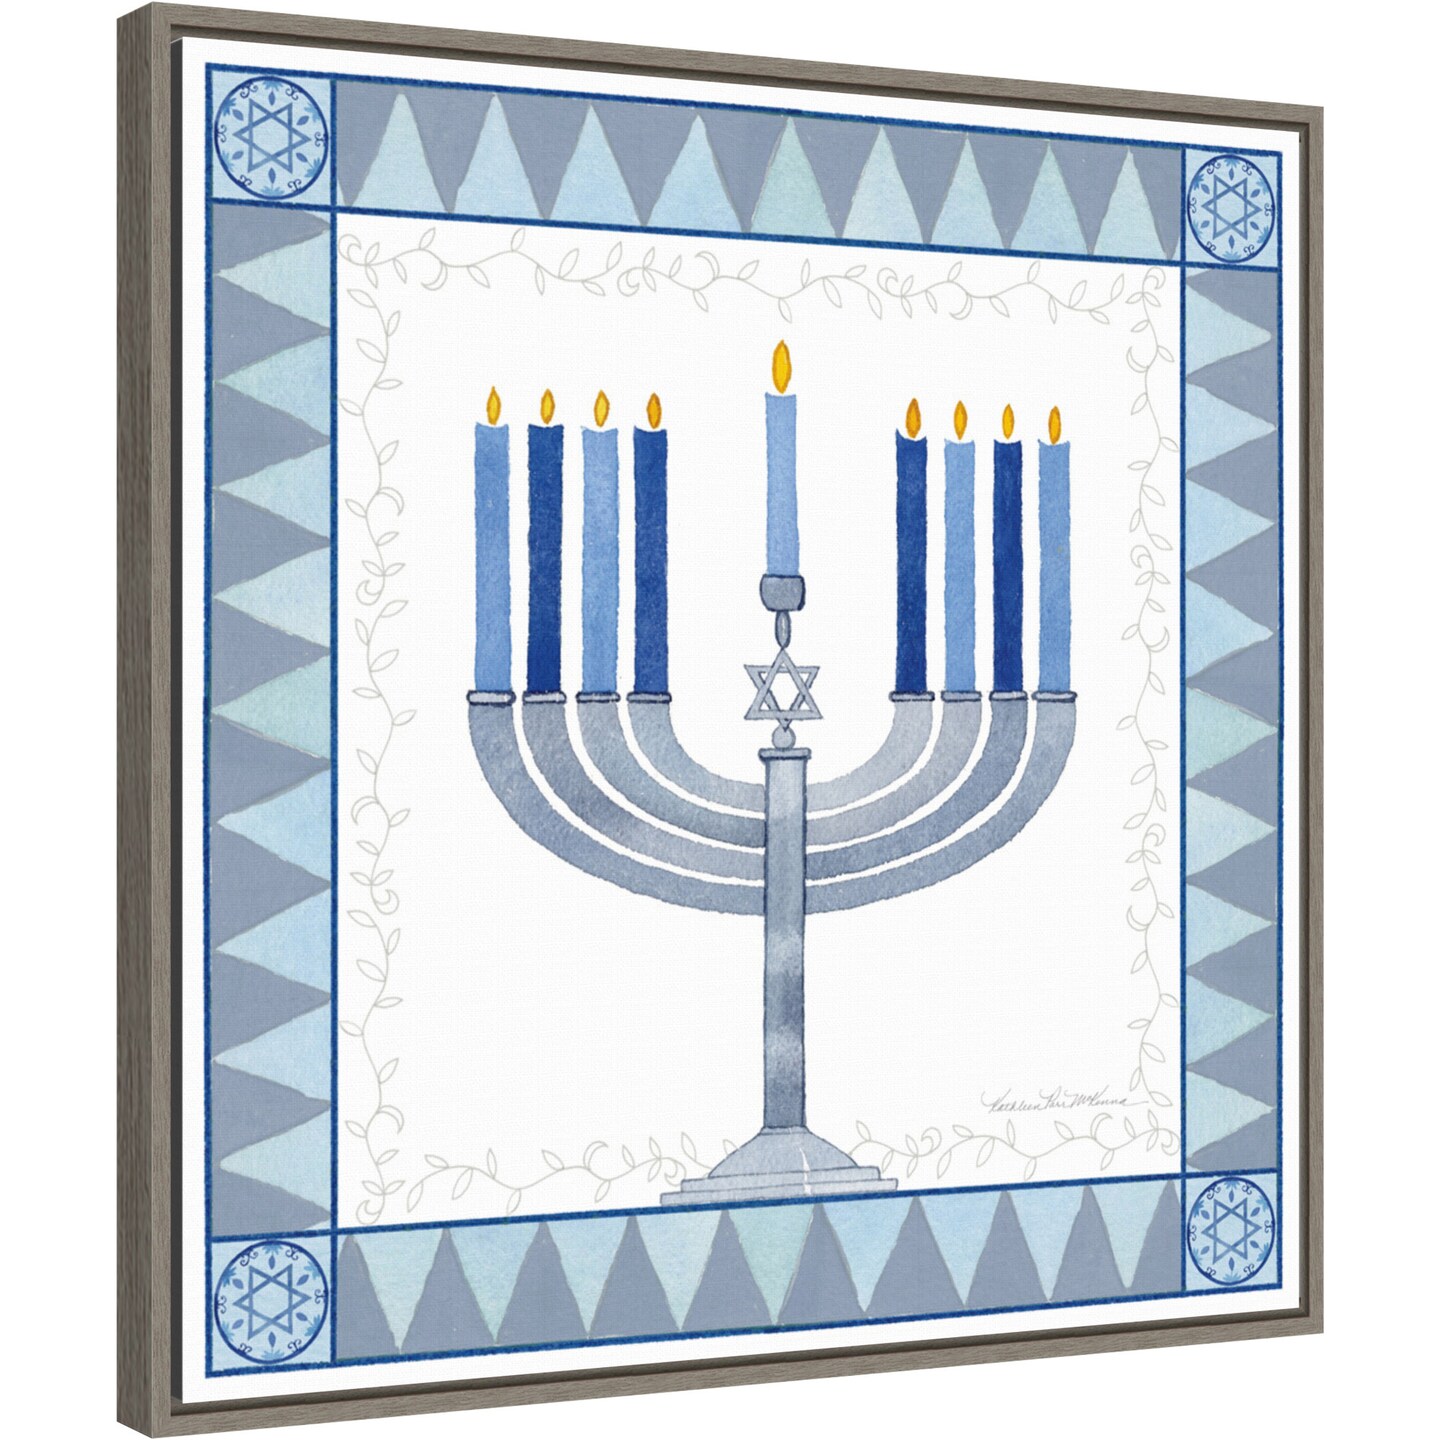 Celebrating Hanukkah III by Kathleen Parr McKenna 22-in. W x 22-in. H. Canvas Wall Art Print Framed in Grey